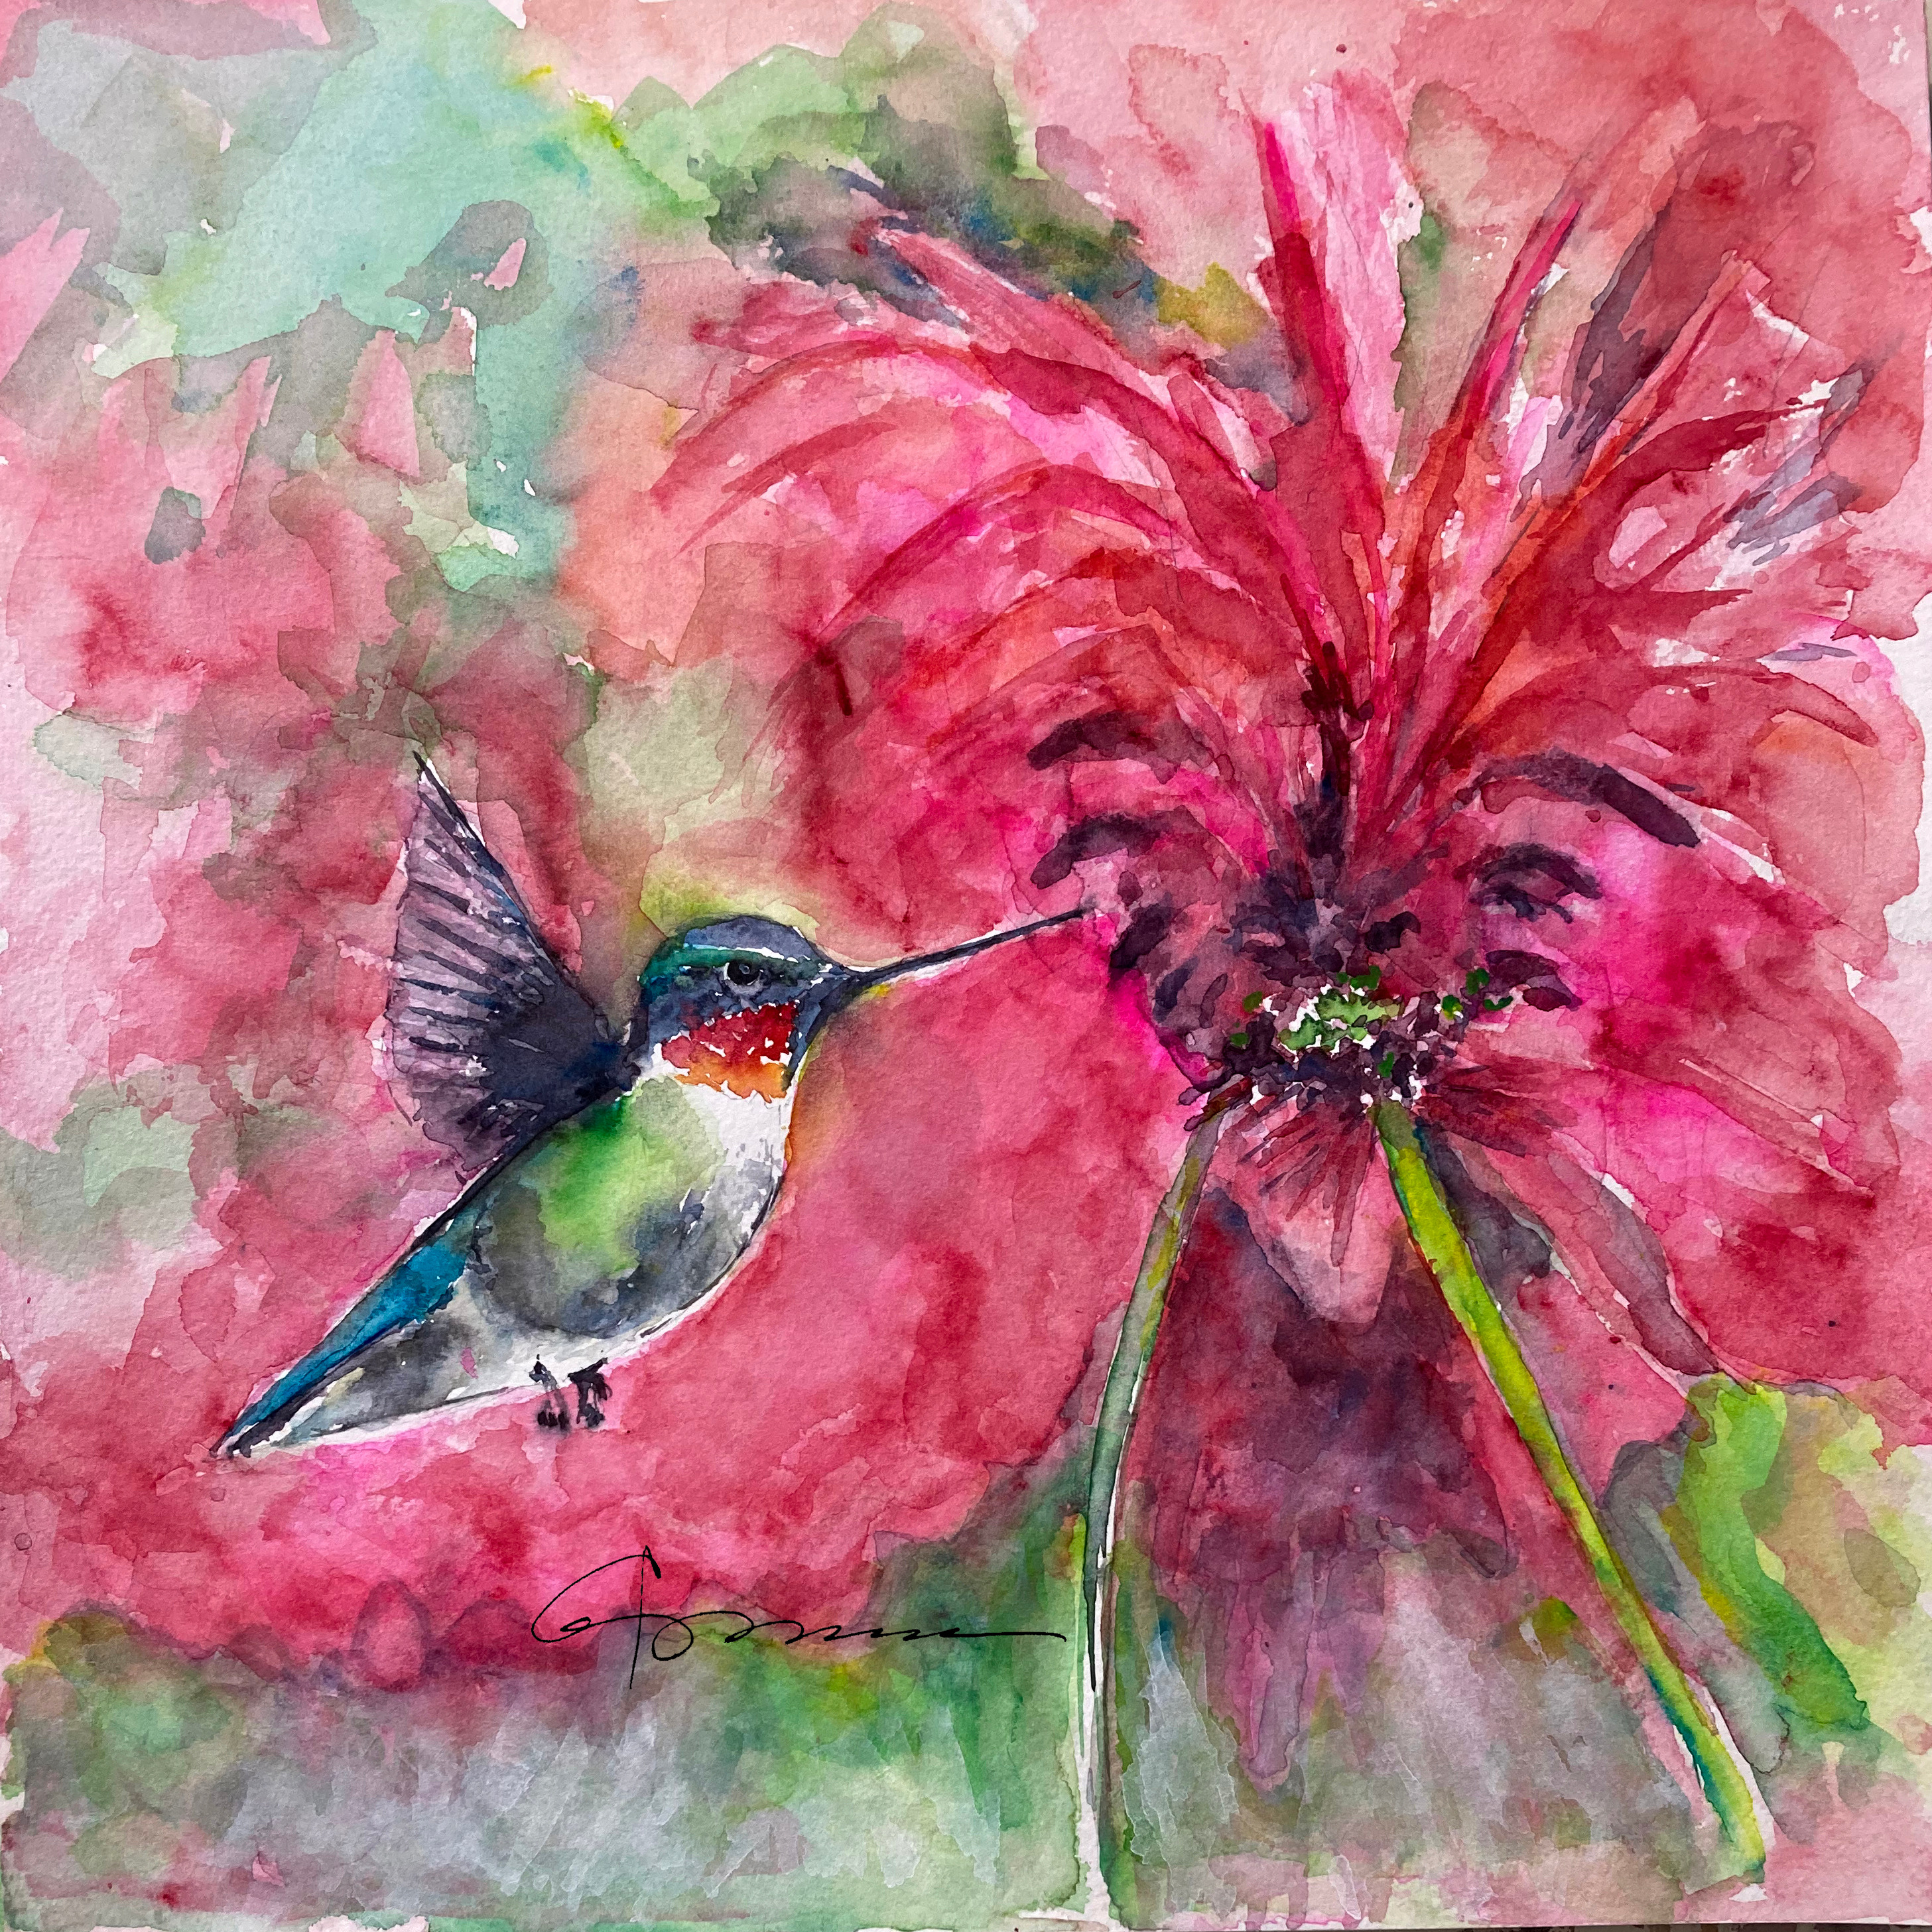 Hummingbird engulfed in red sfal0w